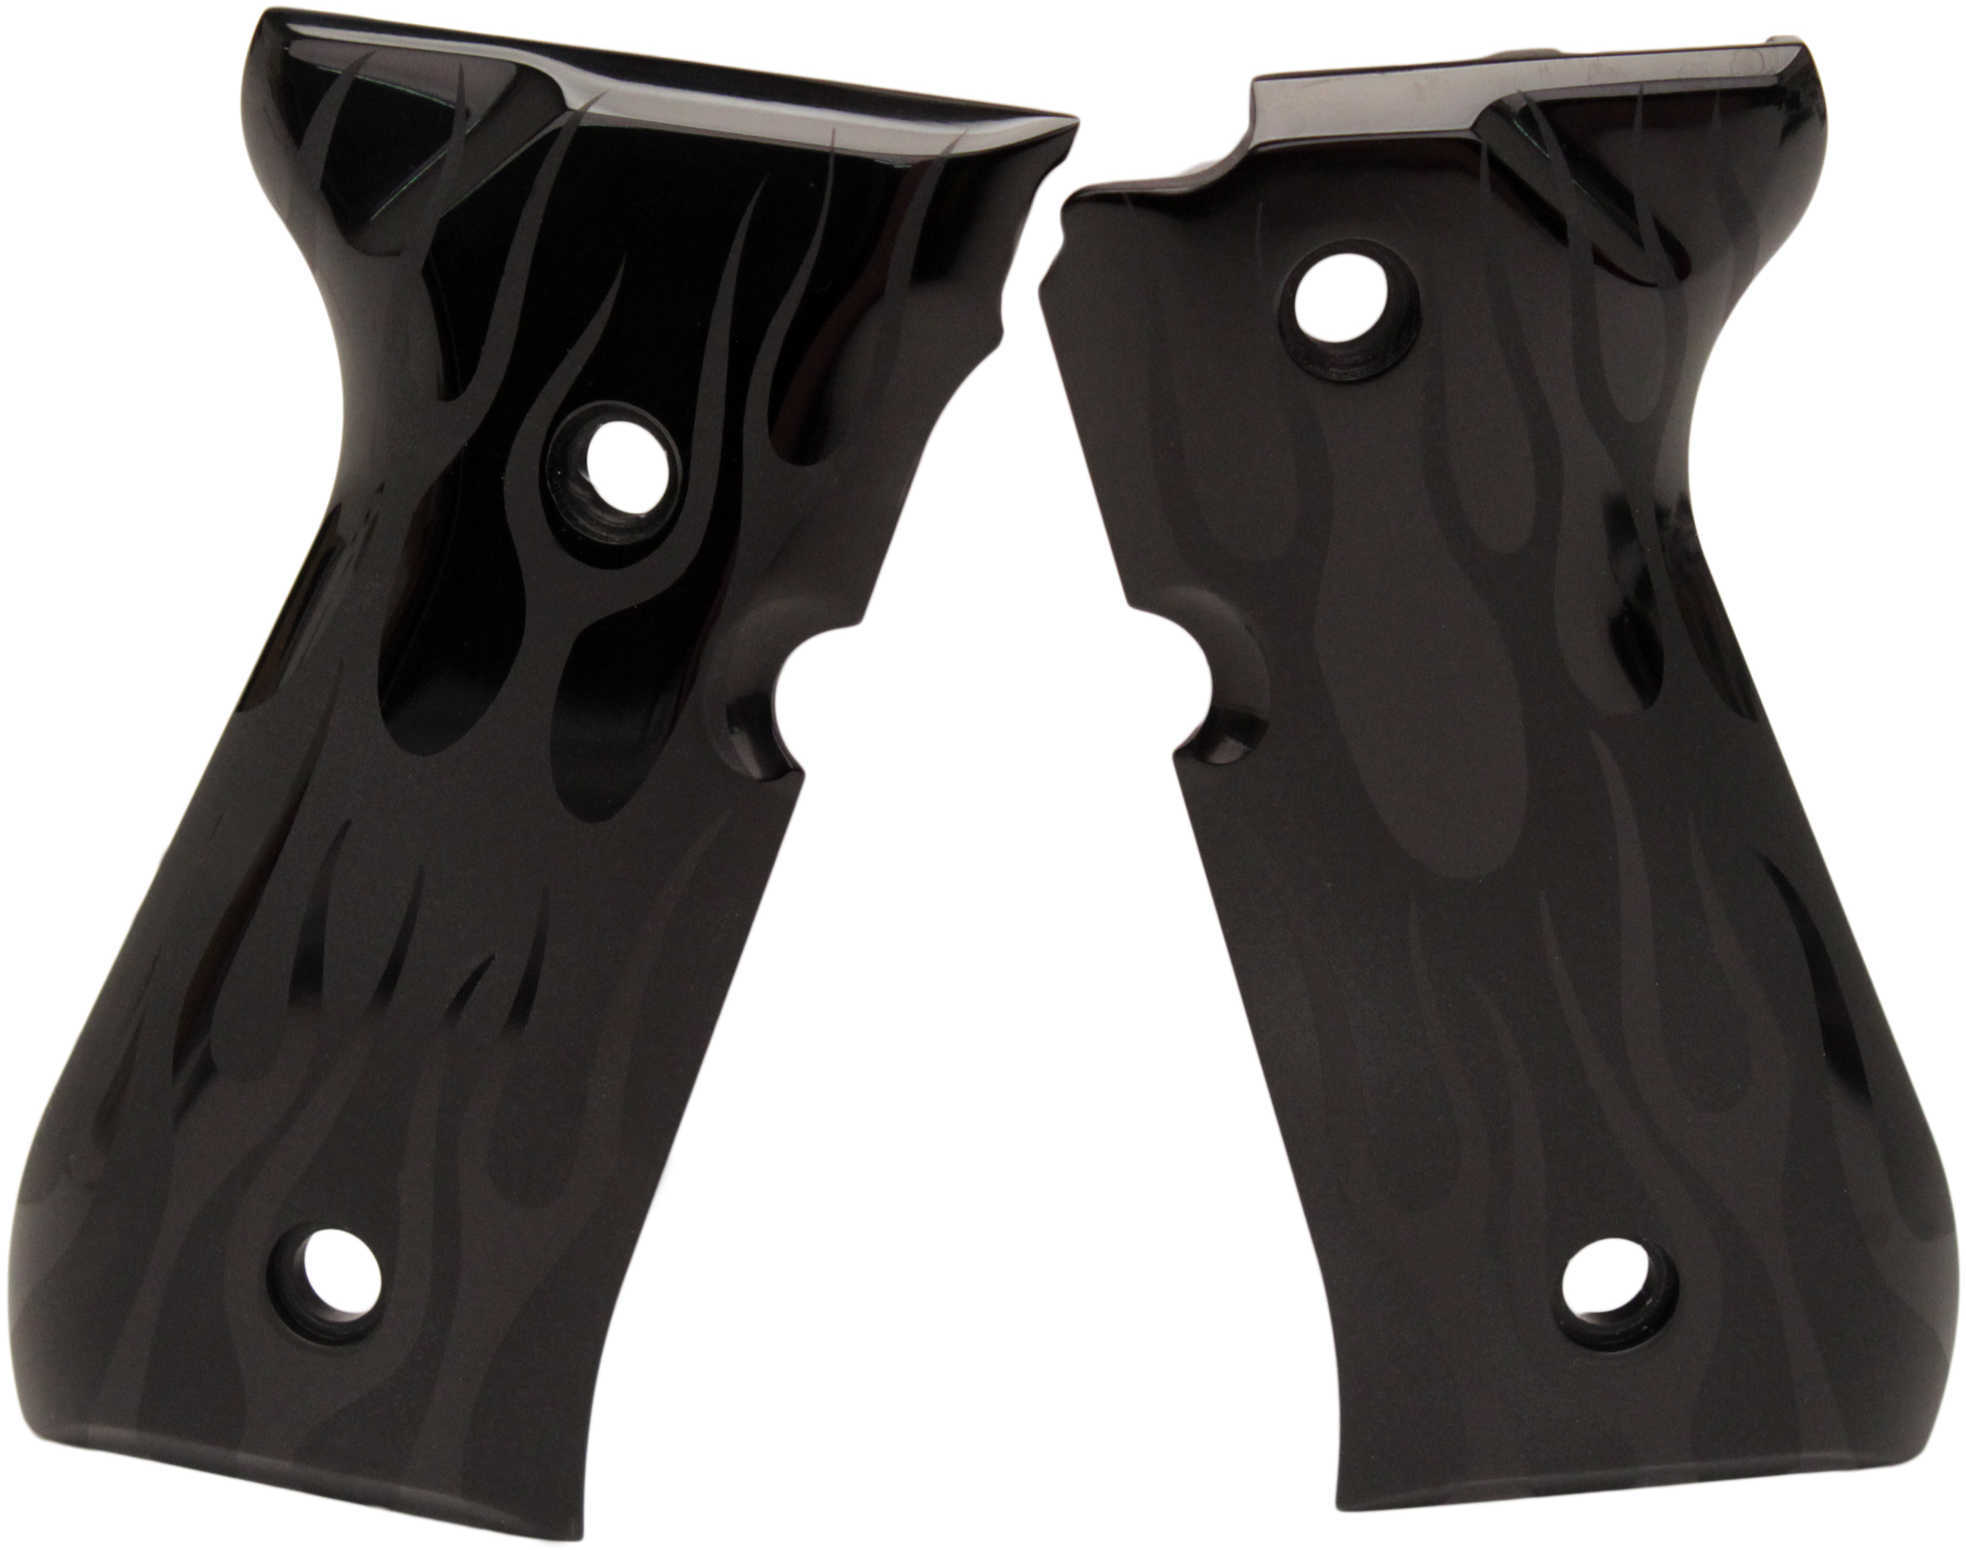 Hogue Beretta 92 Grips Flame Aluminum Black Anodized 92130